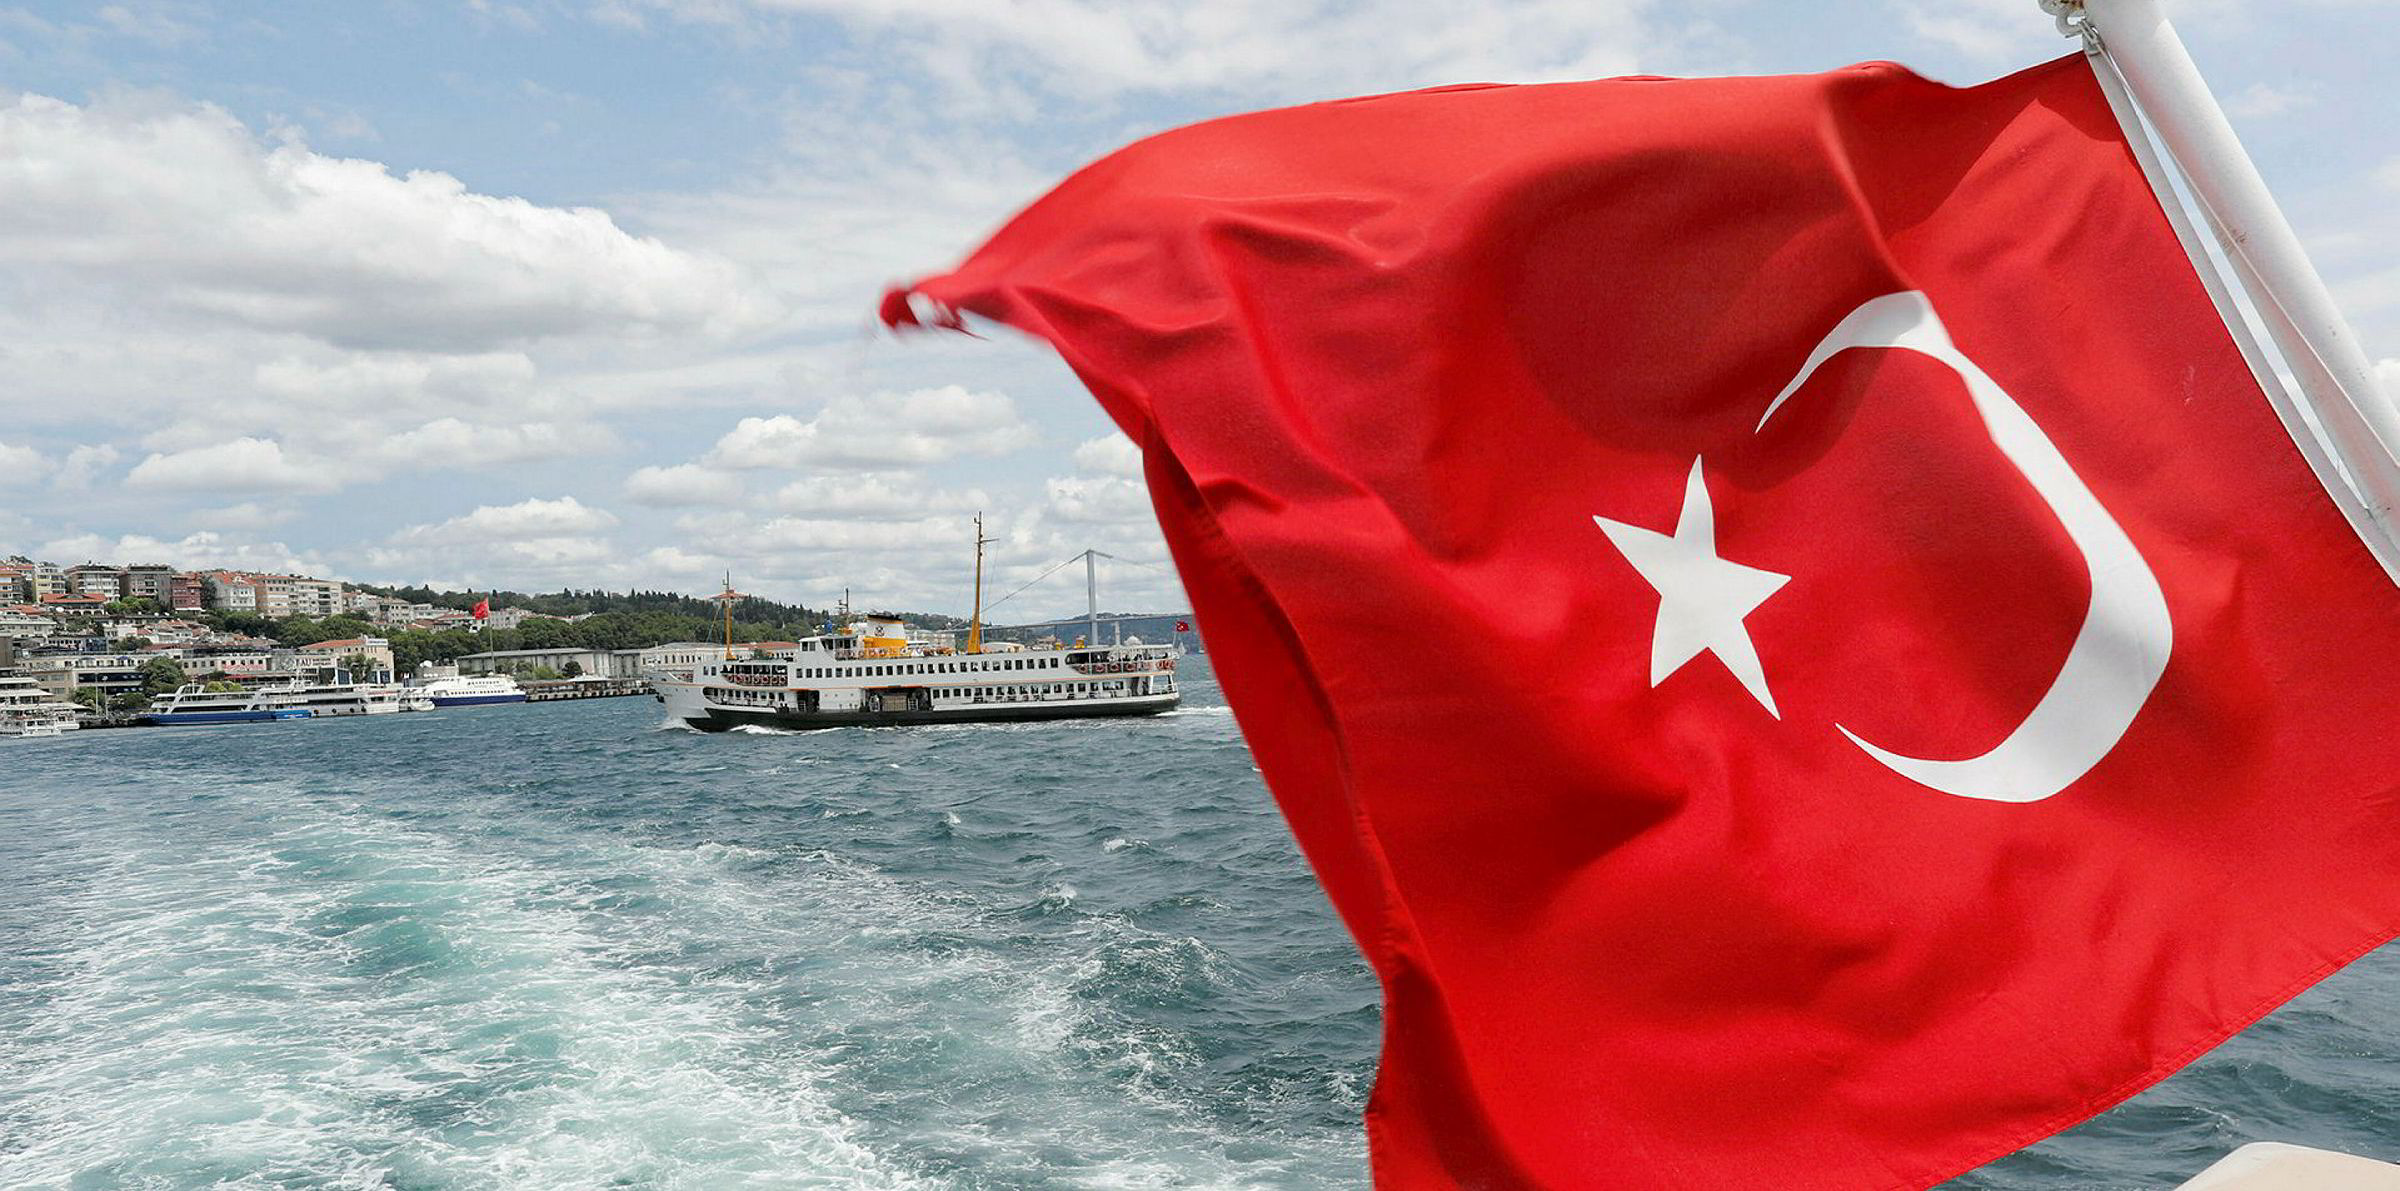 VIDEO: general cargo vessel runs aground near Bosphorus | TradeWinds